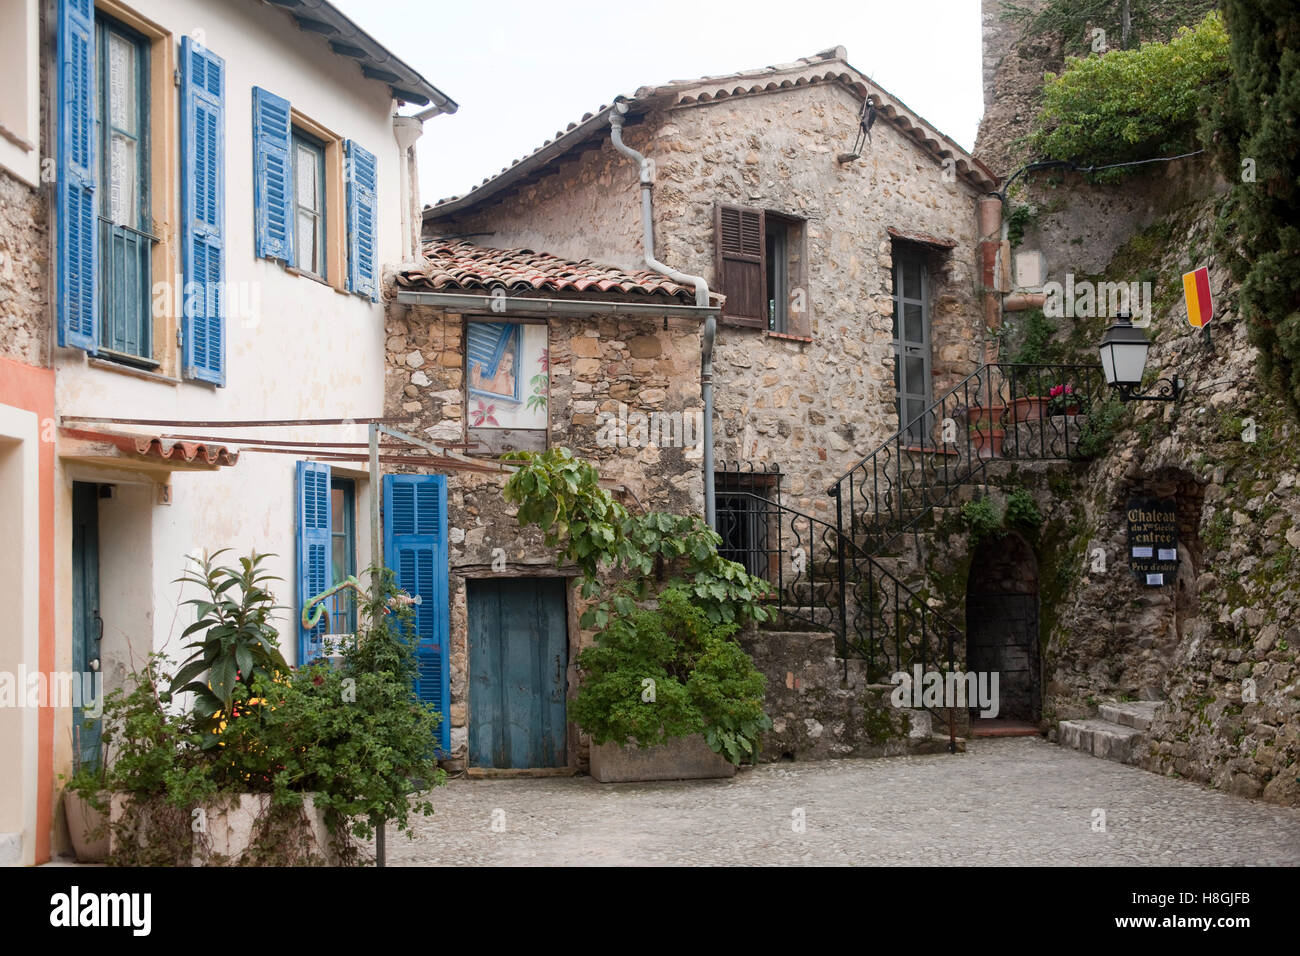 Frankreich, Cote d Azur, Roquebrune-Cap-Martin bei Menton Foto Stock